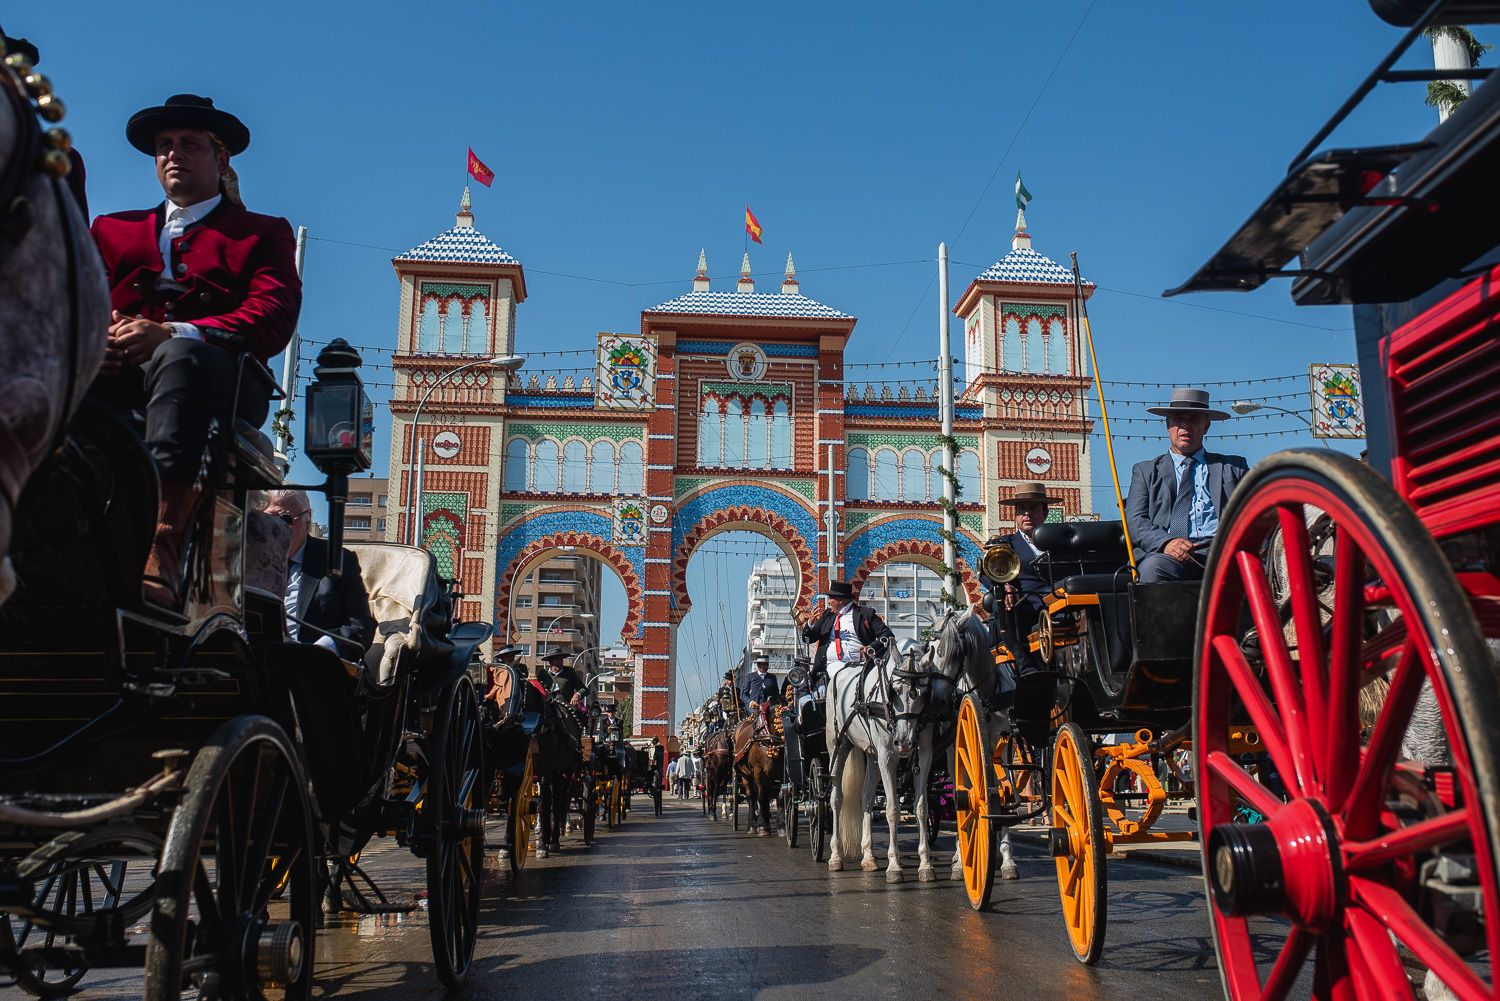 Coches de caballos frente a la Portada de la Feria de Sevilla.